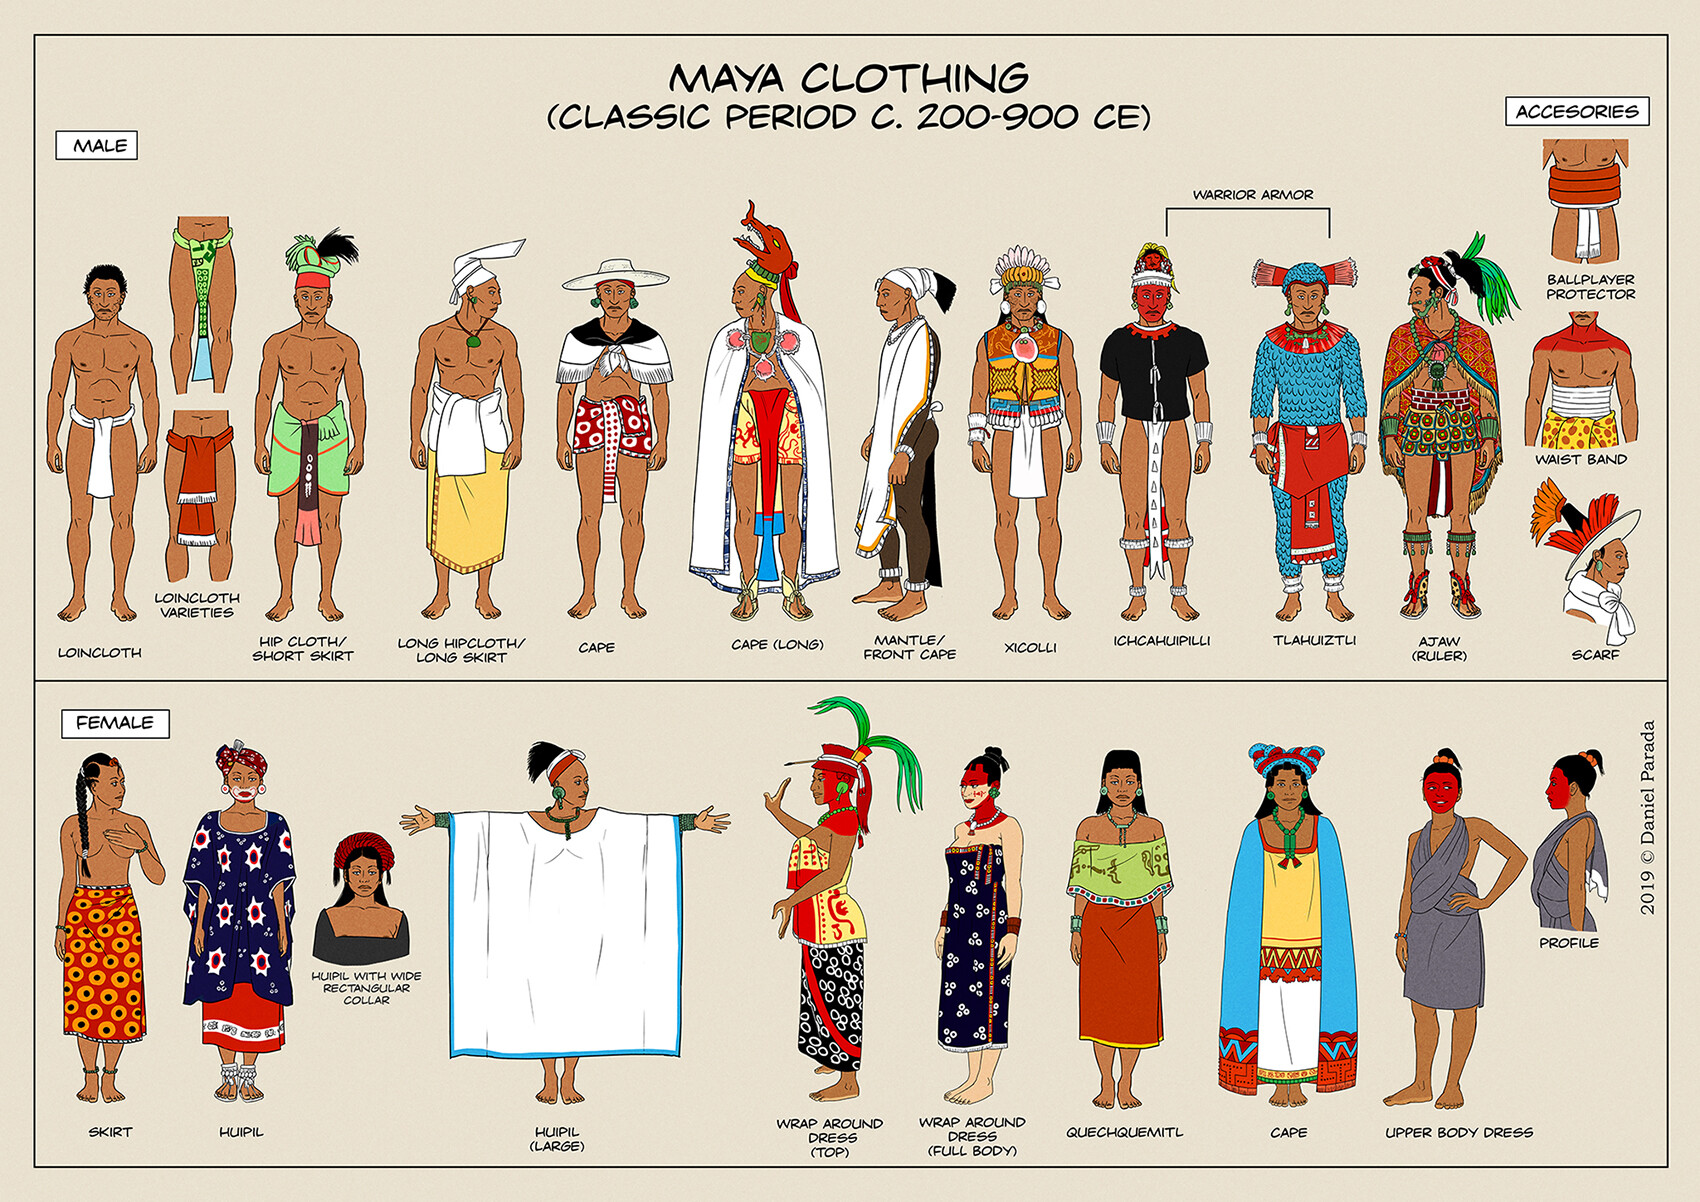 ArtStation - Maya Classic period clothing studies